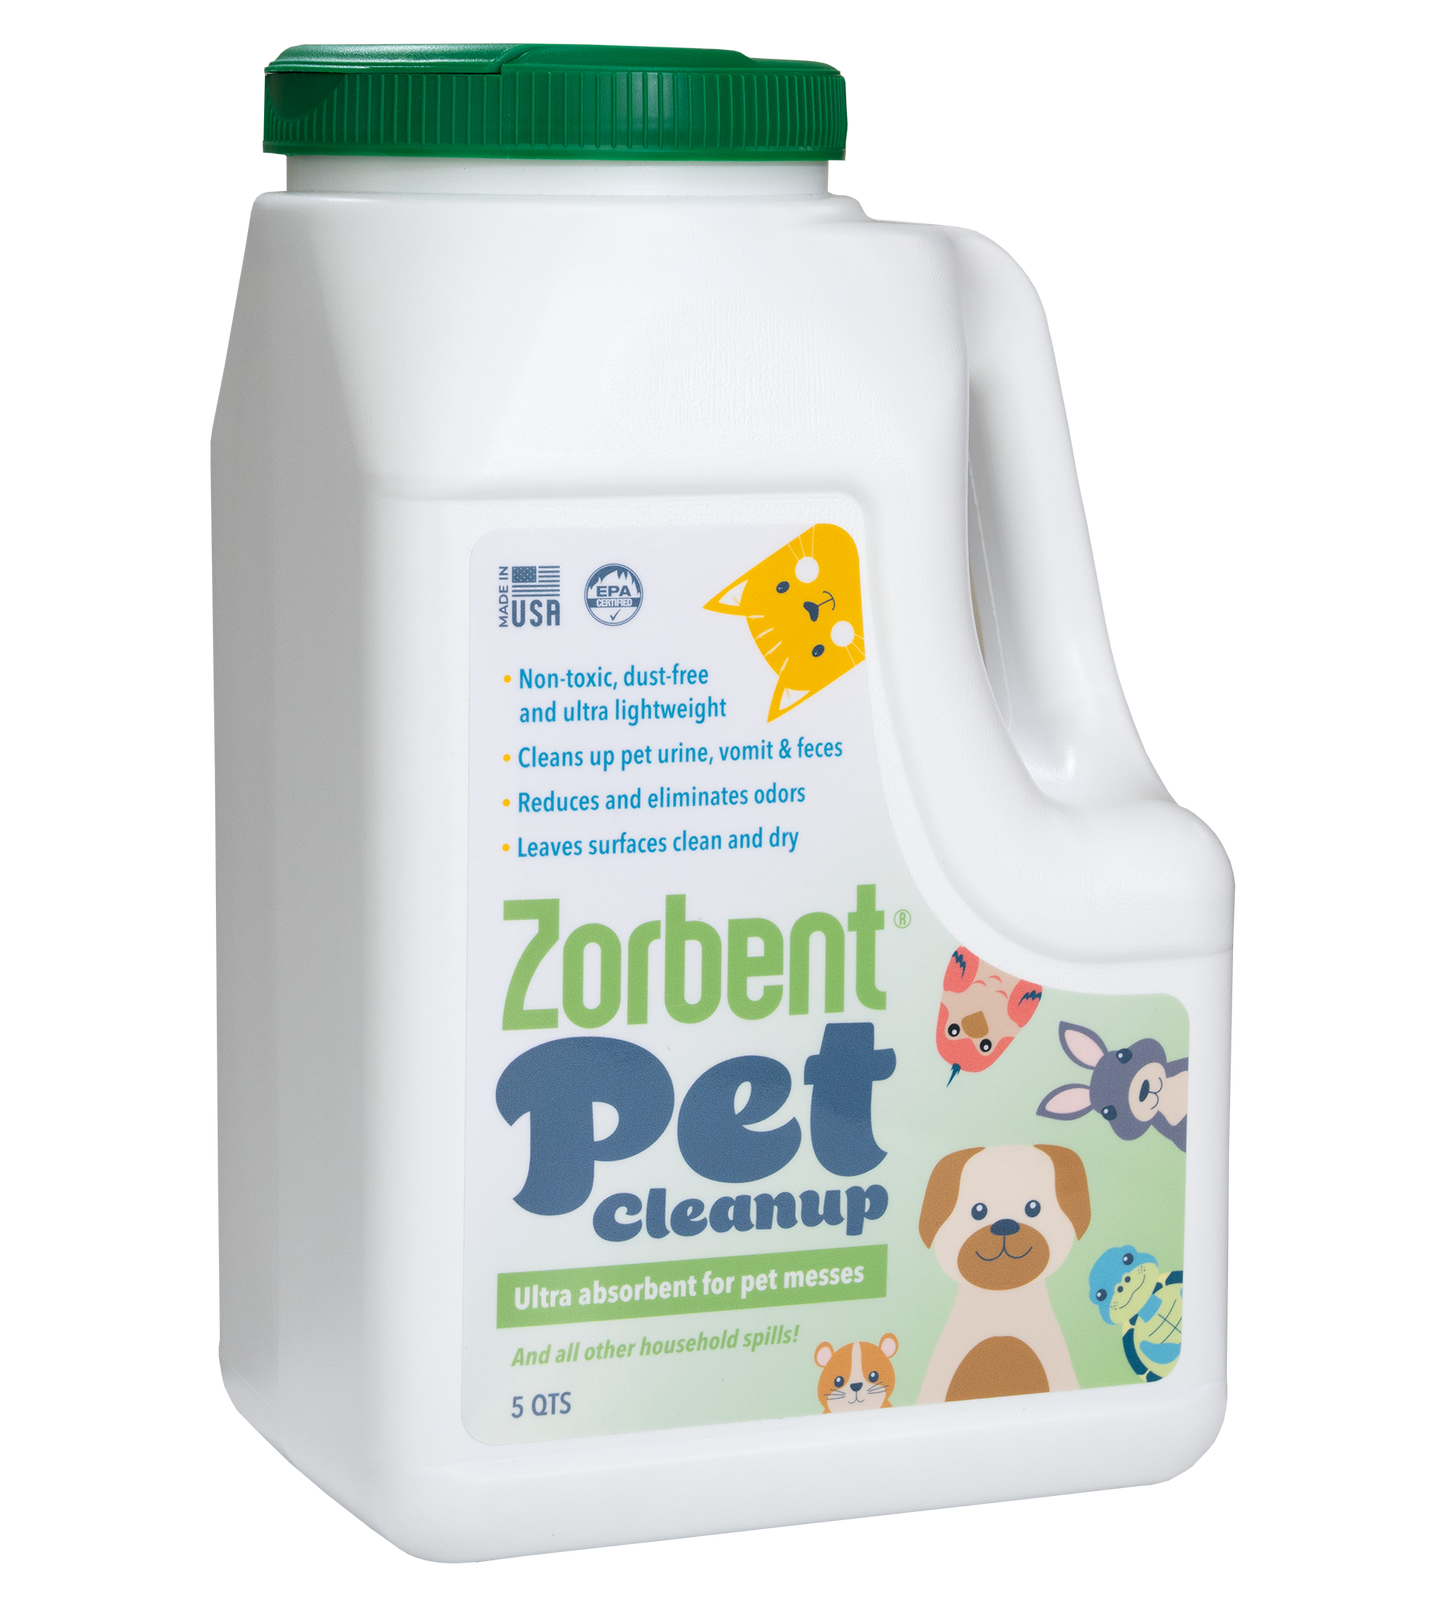 Zorbent® Pet Cleanup